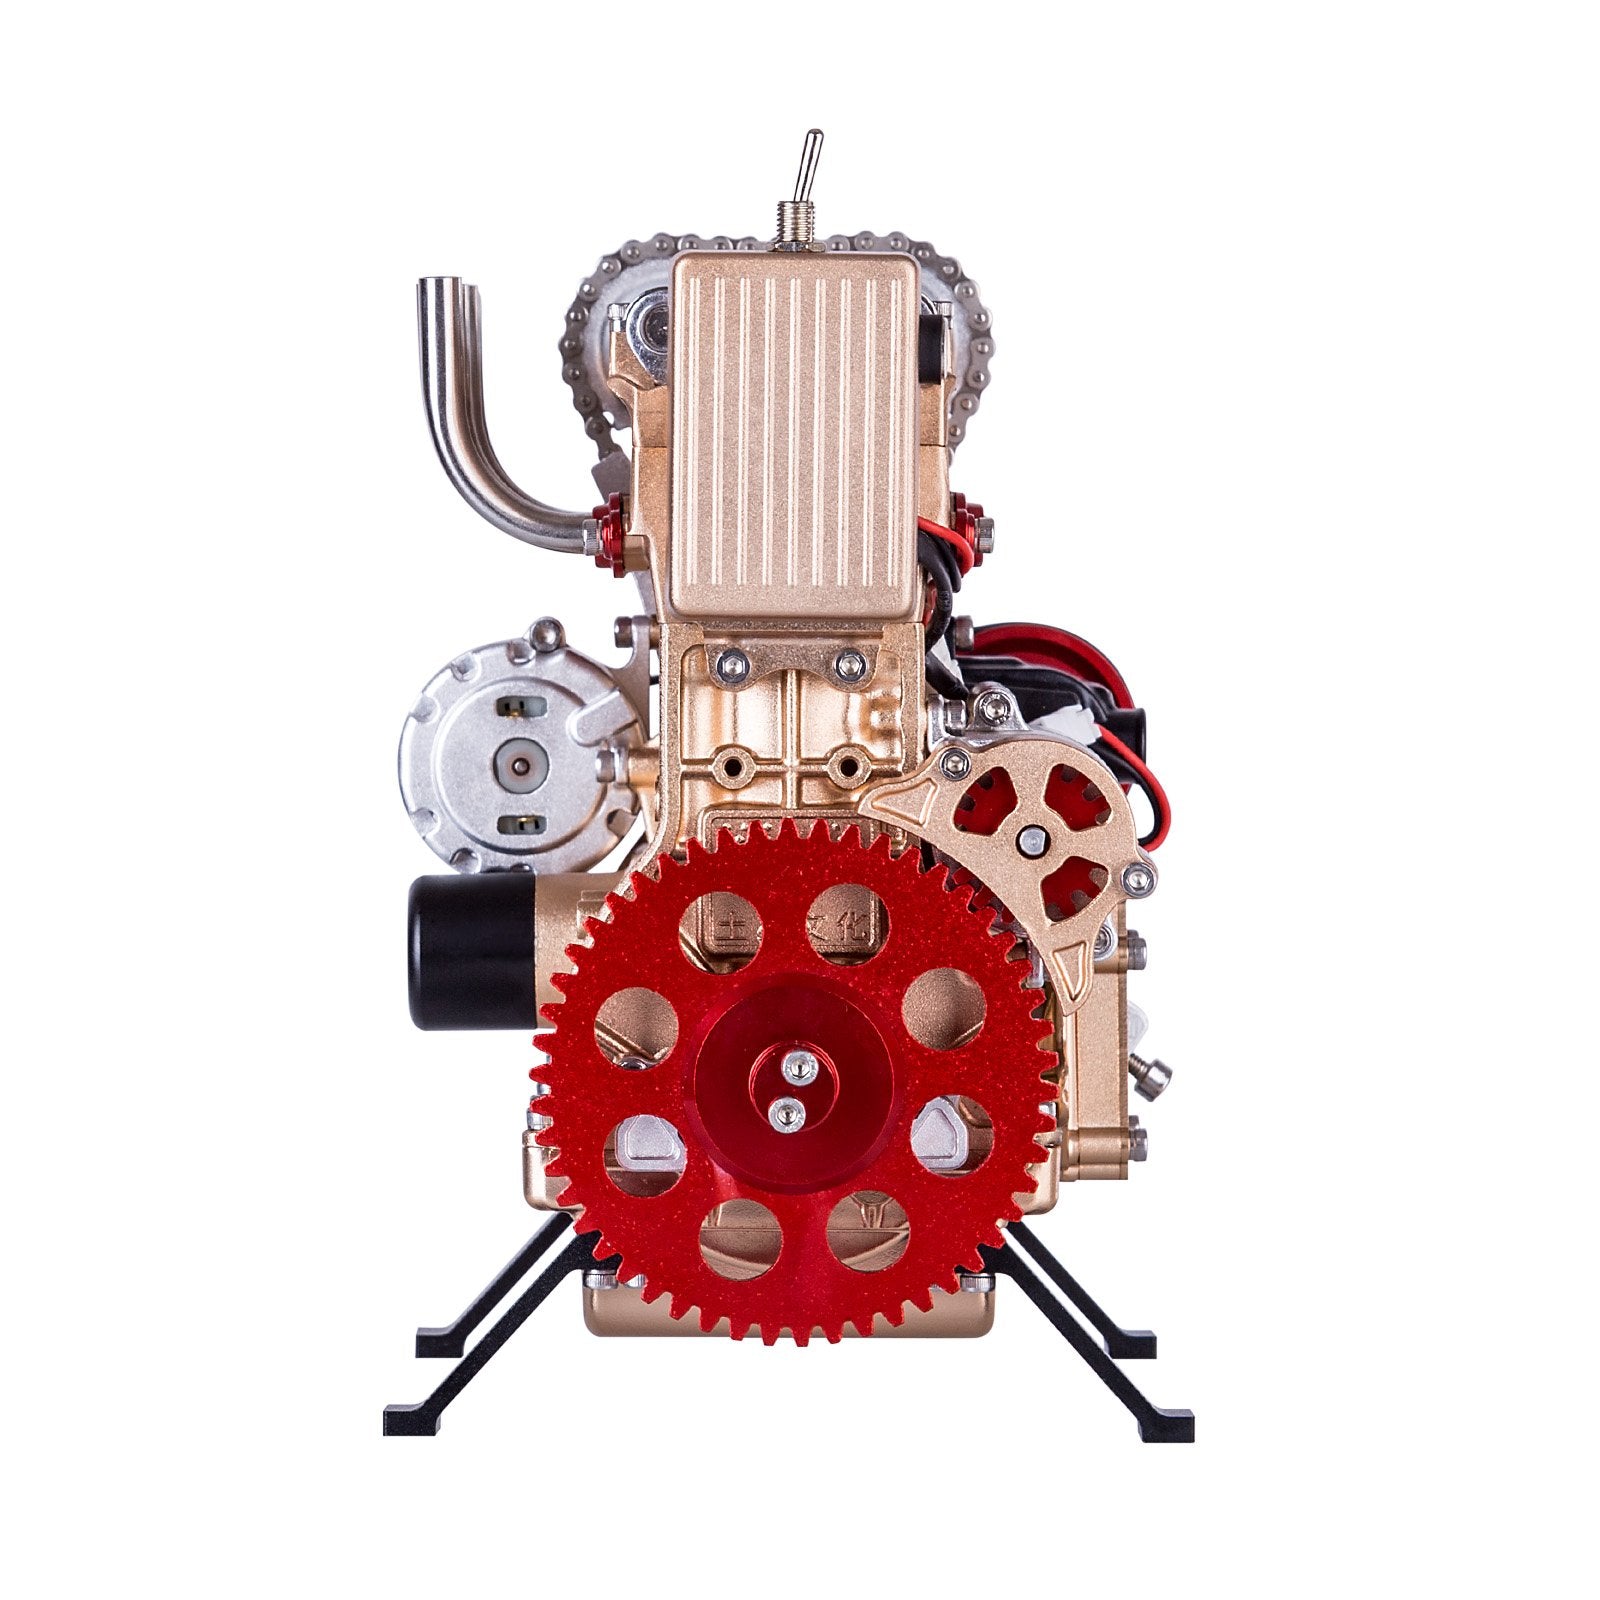 V2 DIY Alloy 2 Cylinder Auto Engine Adult Metal Mechanical Art